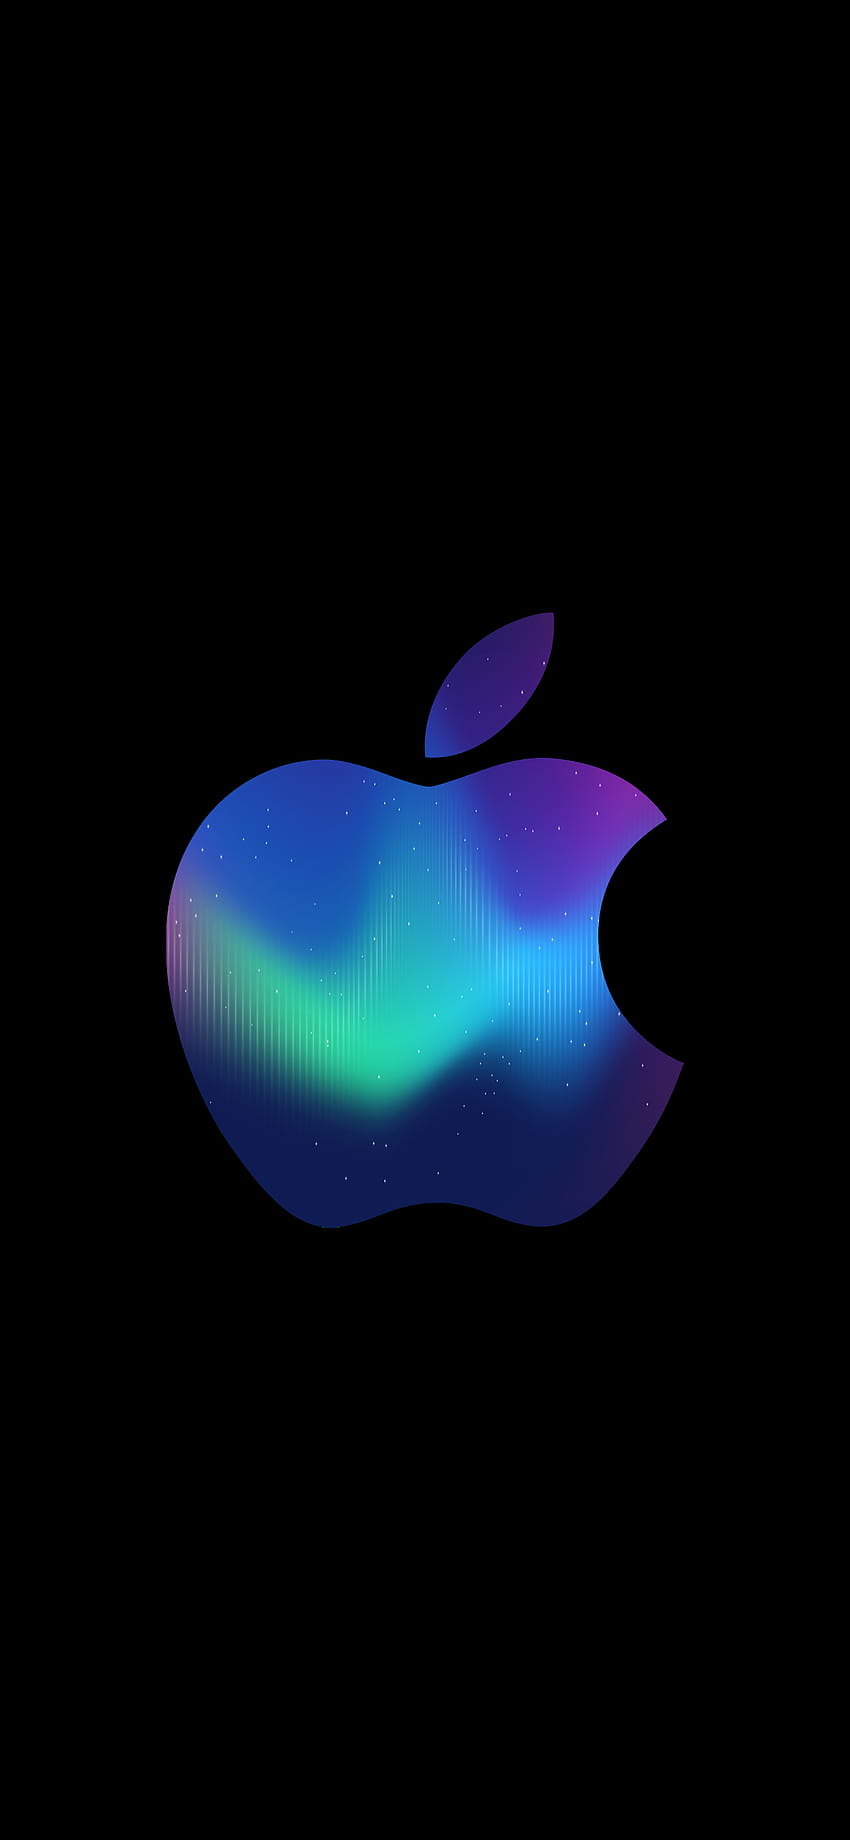 Apple, Amoled, IPhone, manzanas, frutas, s, logo amoled iphone fondo de pantalla del teléfono